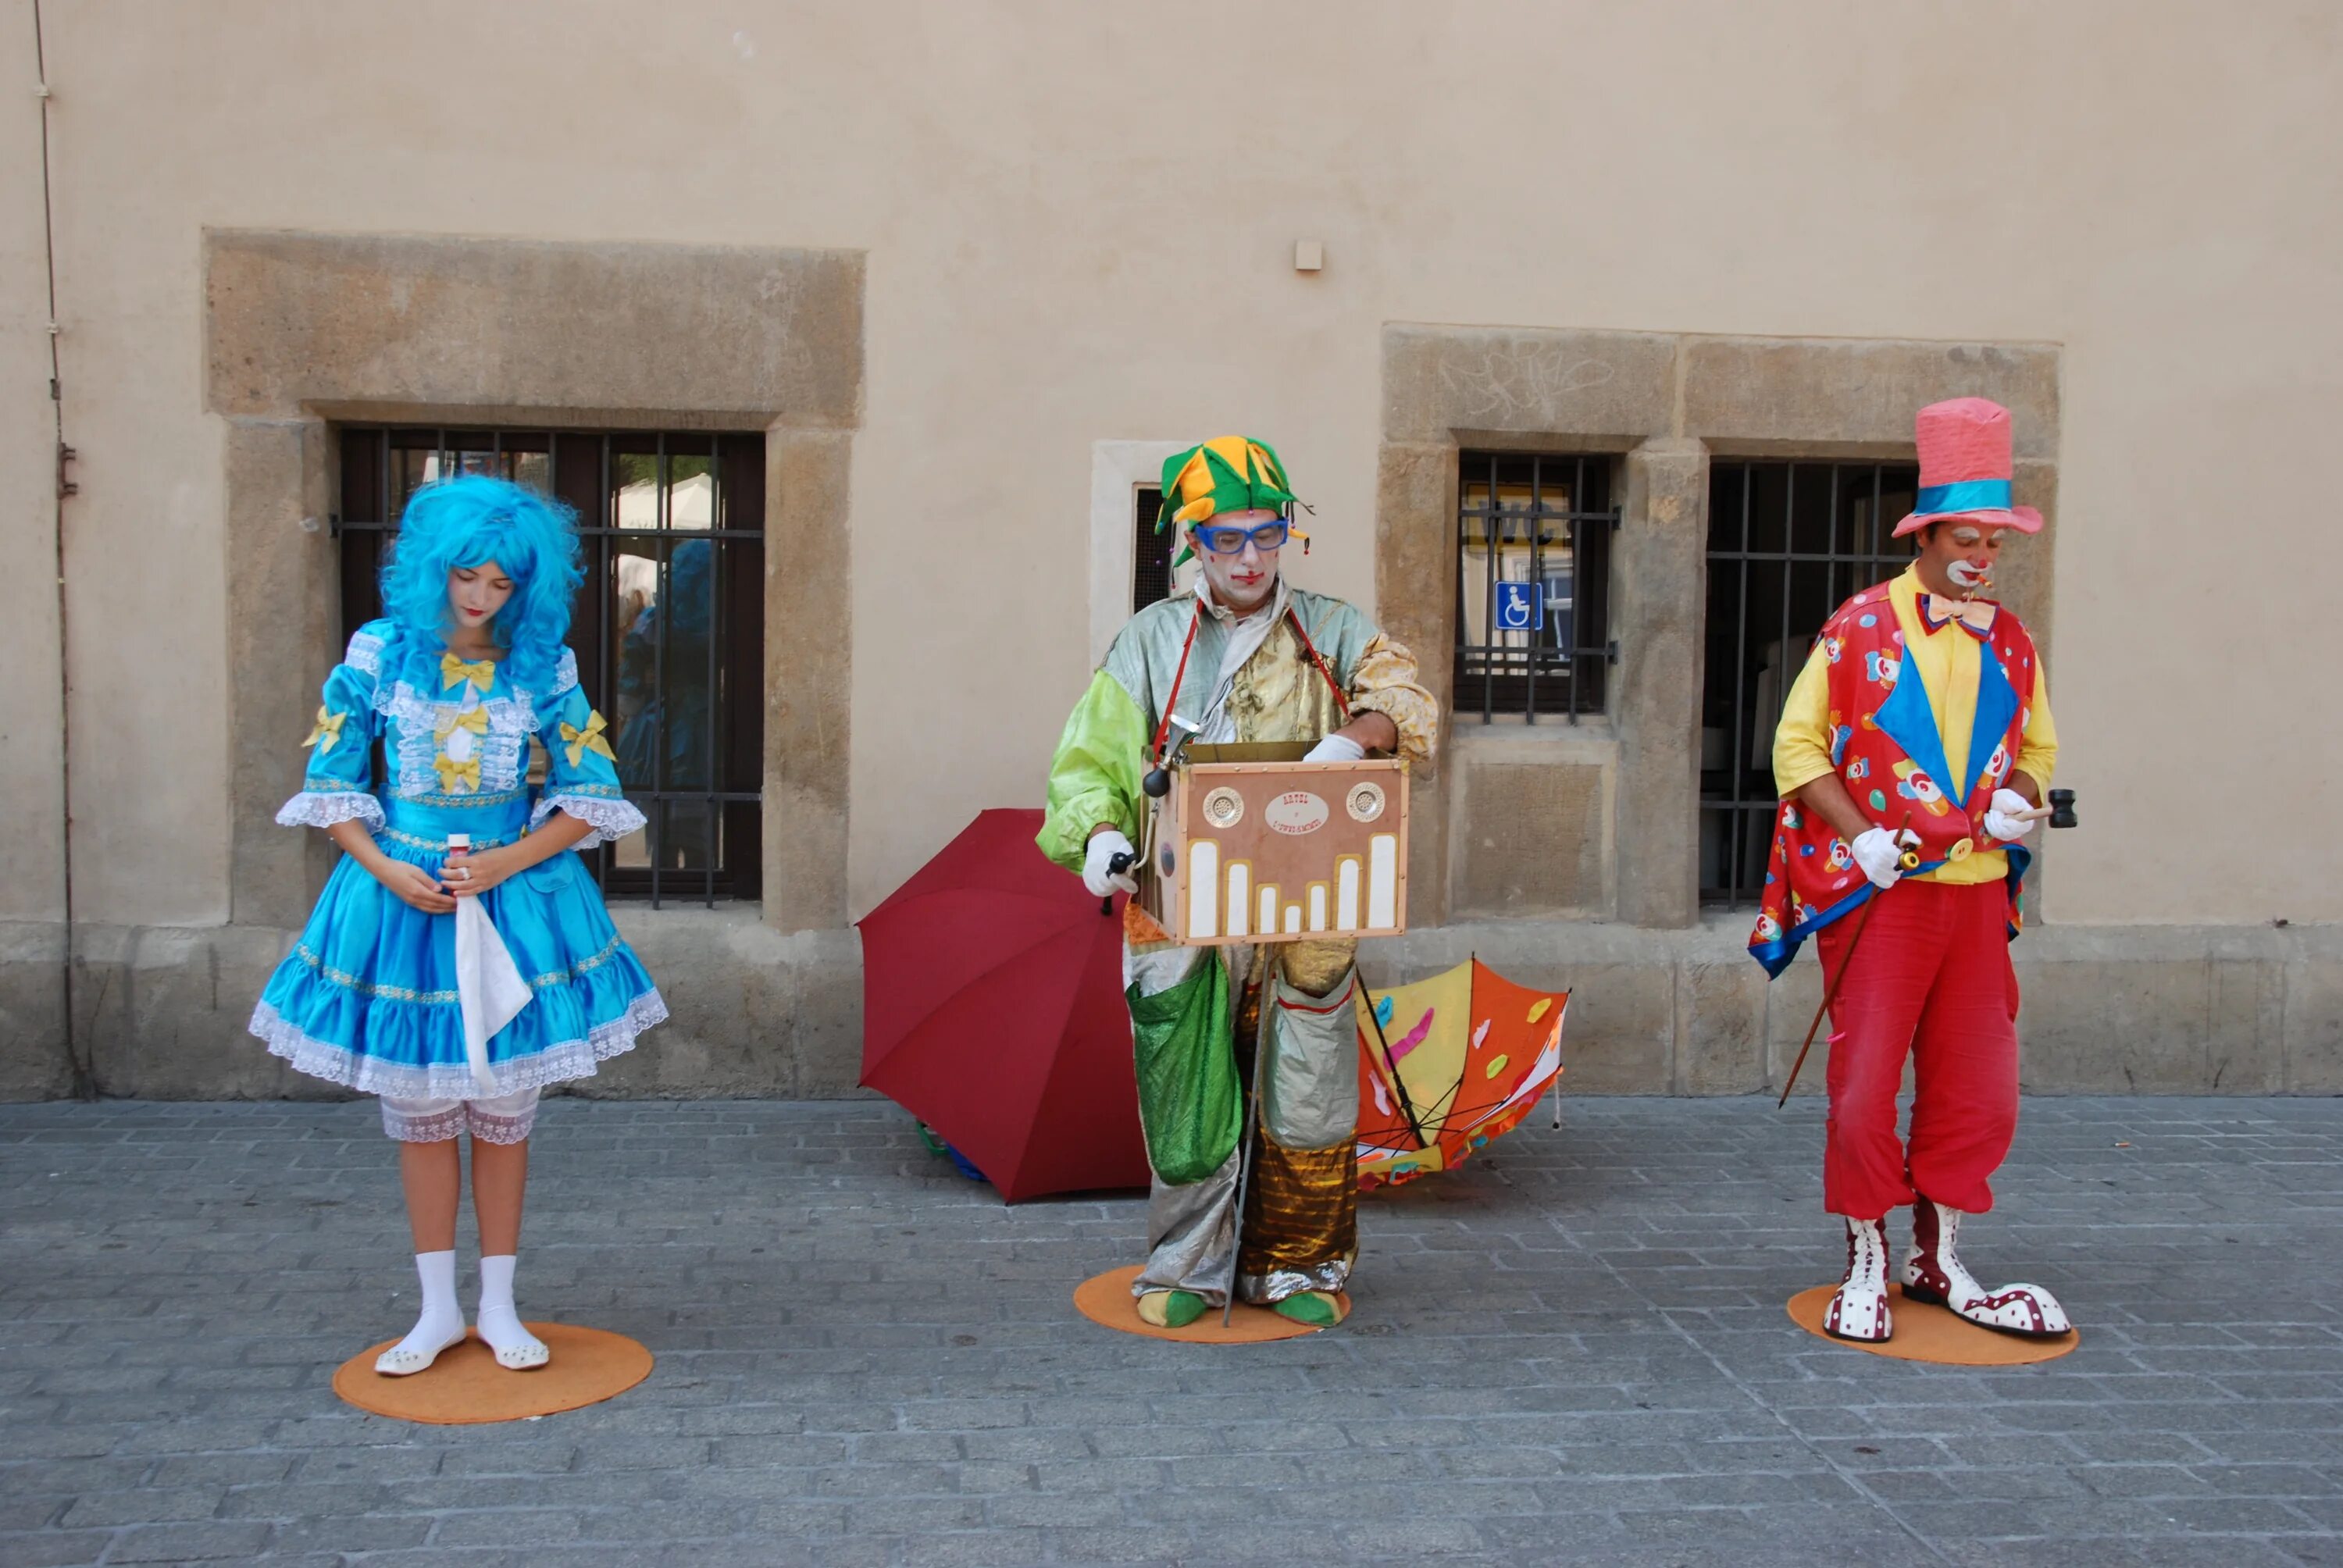 Дармштадт клоуны. Уличный клоун. Клоун на улице. Уличные клоуны в Италии. Необычные уличные клоуны.